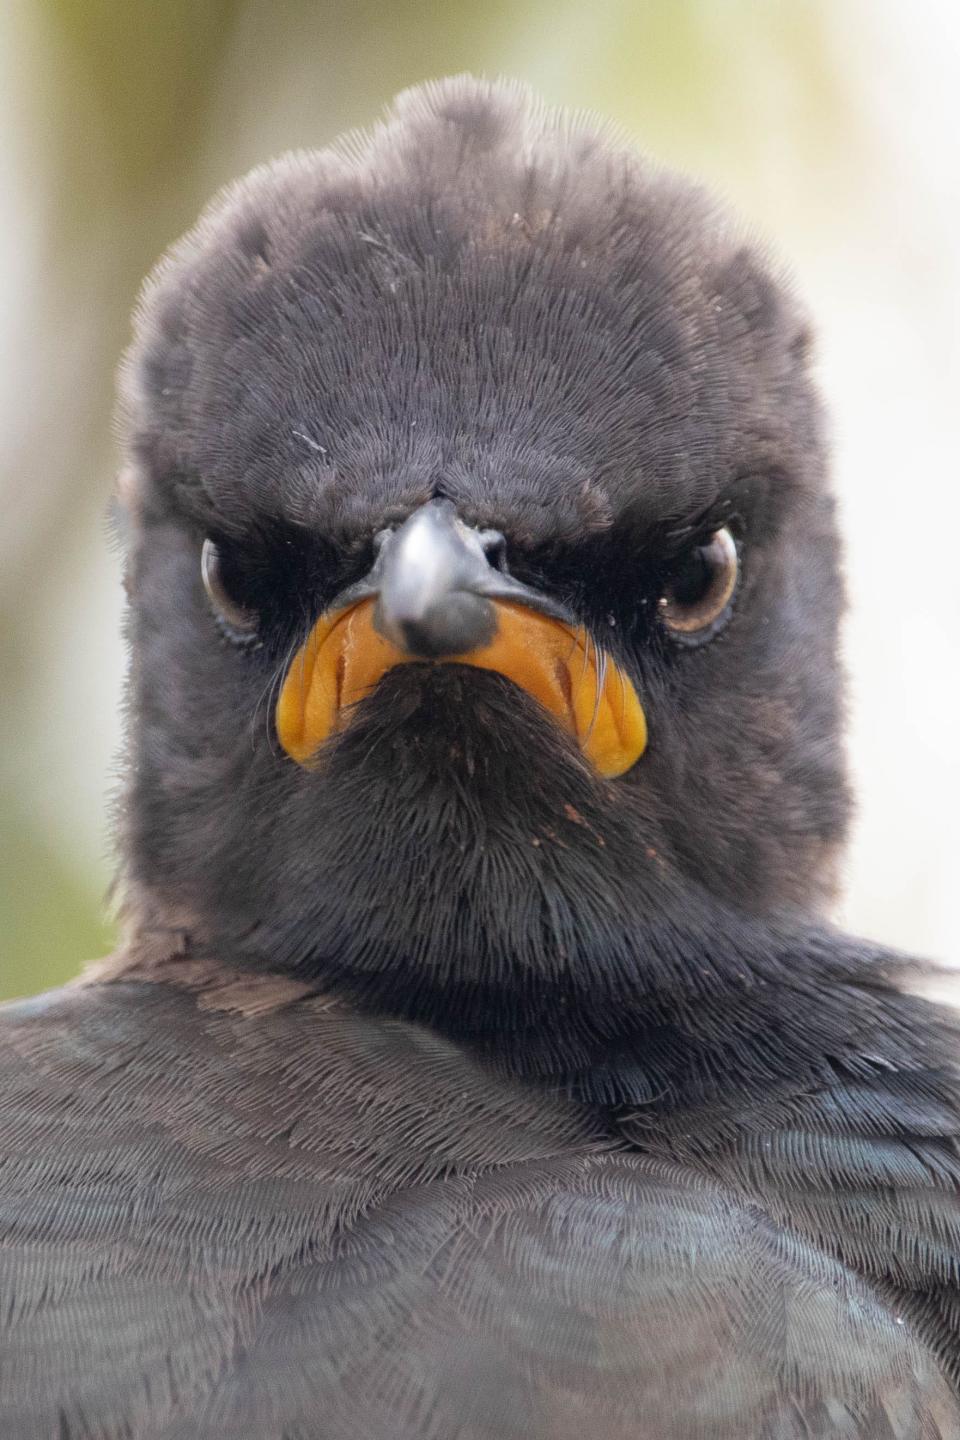 A grumpy-looking pied starling bird.